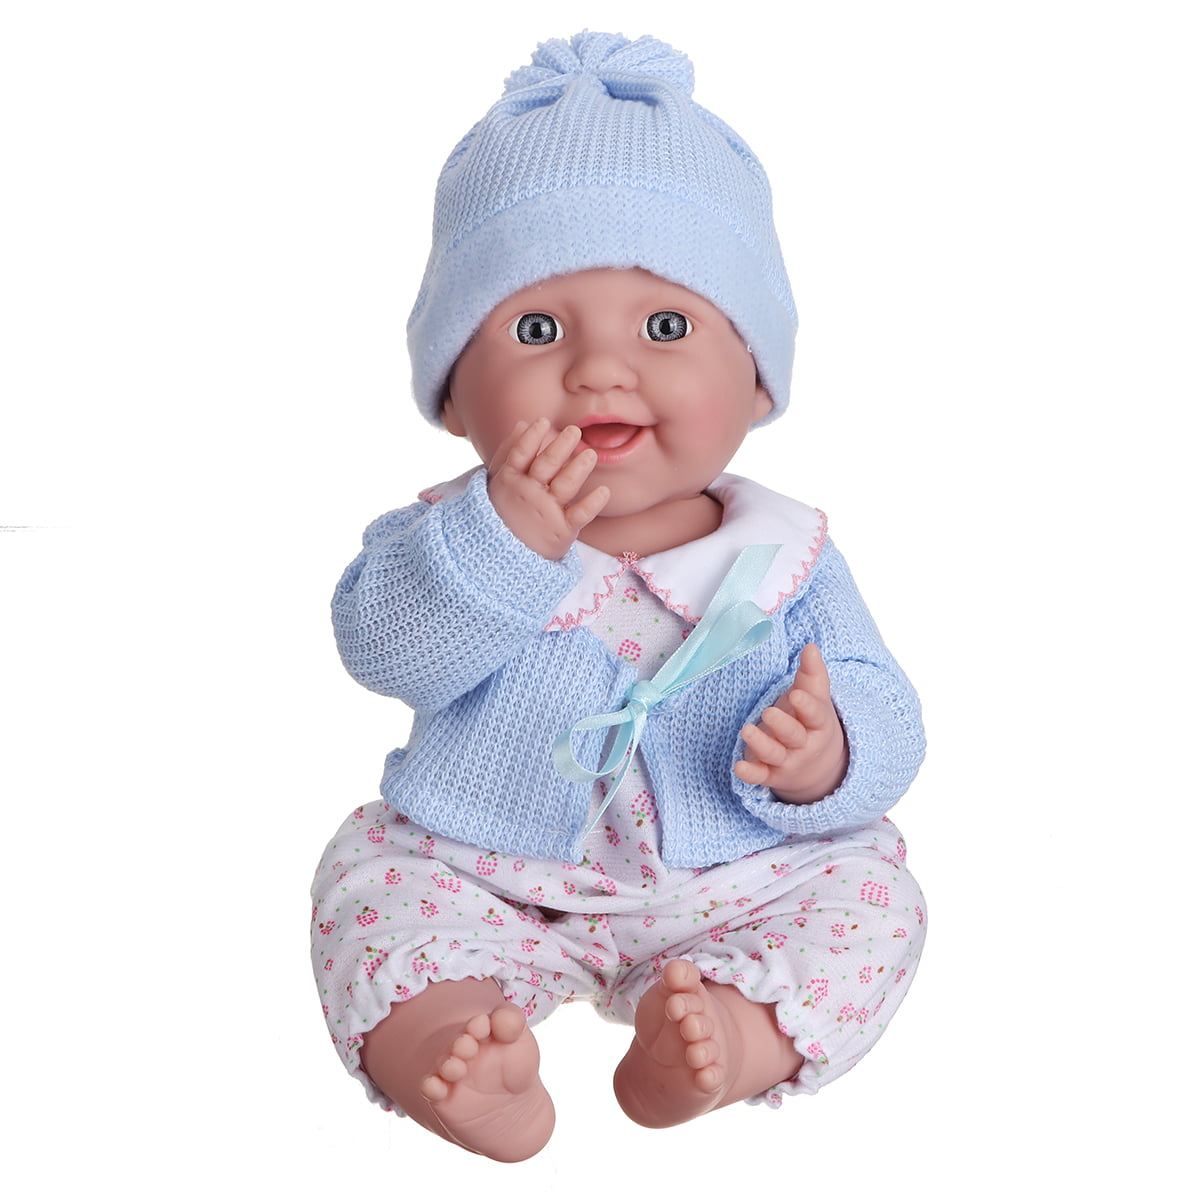 16" Reborn Baby Dolls Real Life Vinyl Silicone Girl Newborn Doll Birthday Gift 